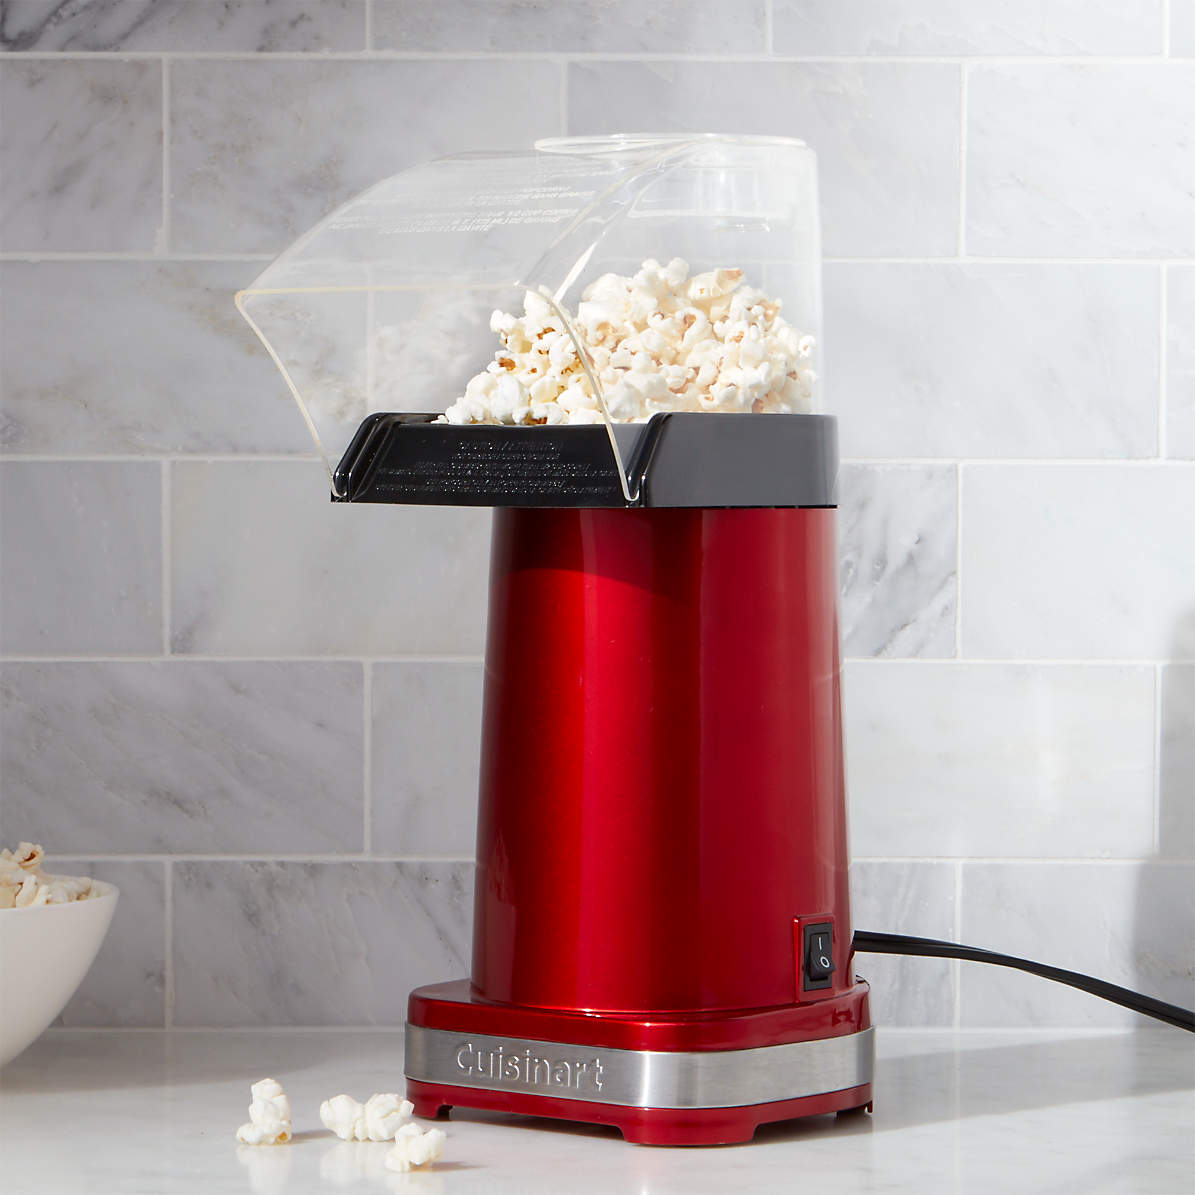 Cuisinart CPM-100 EasyPop Hot Air Popcorn Maker, Red